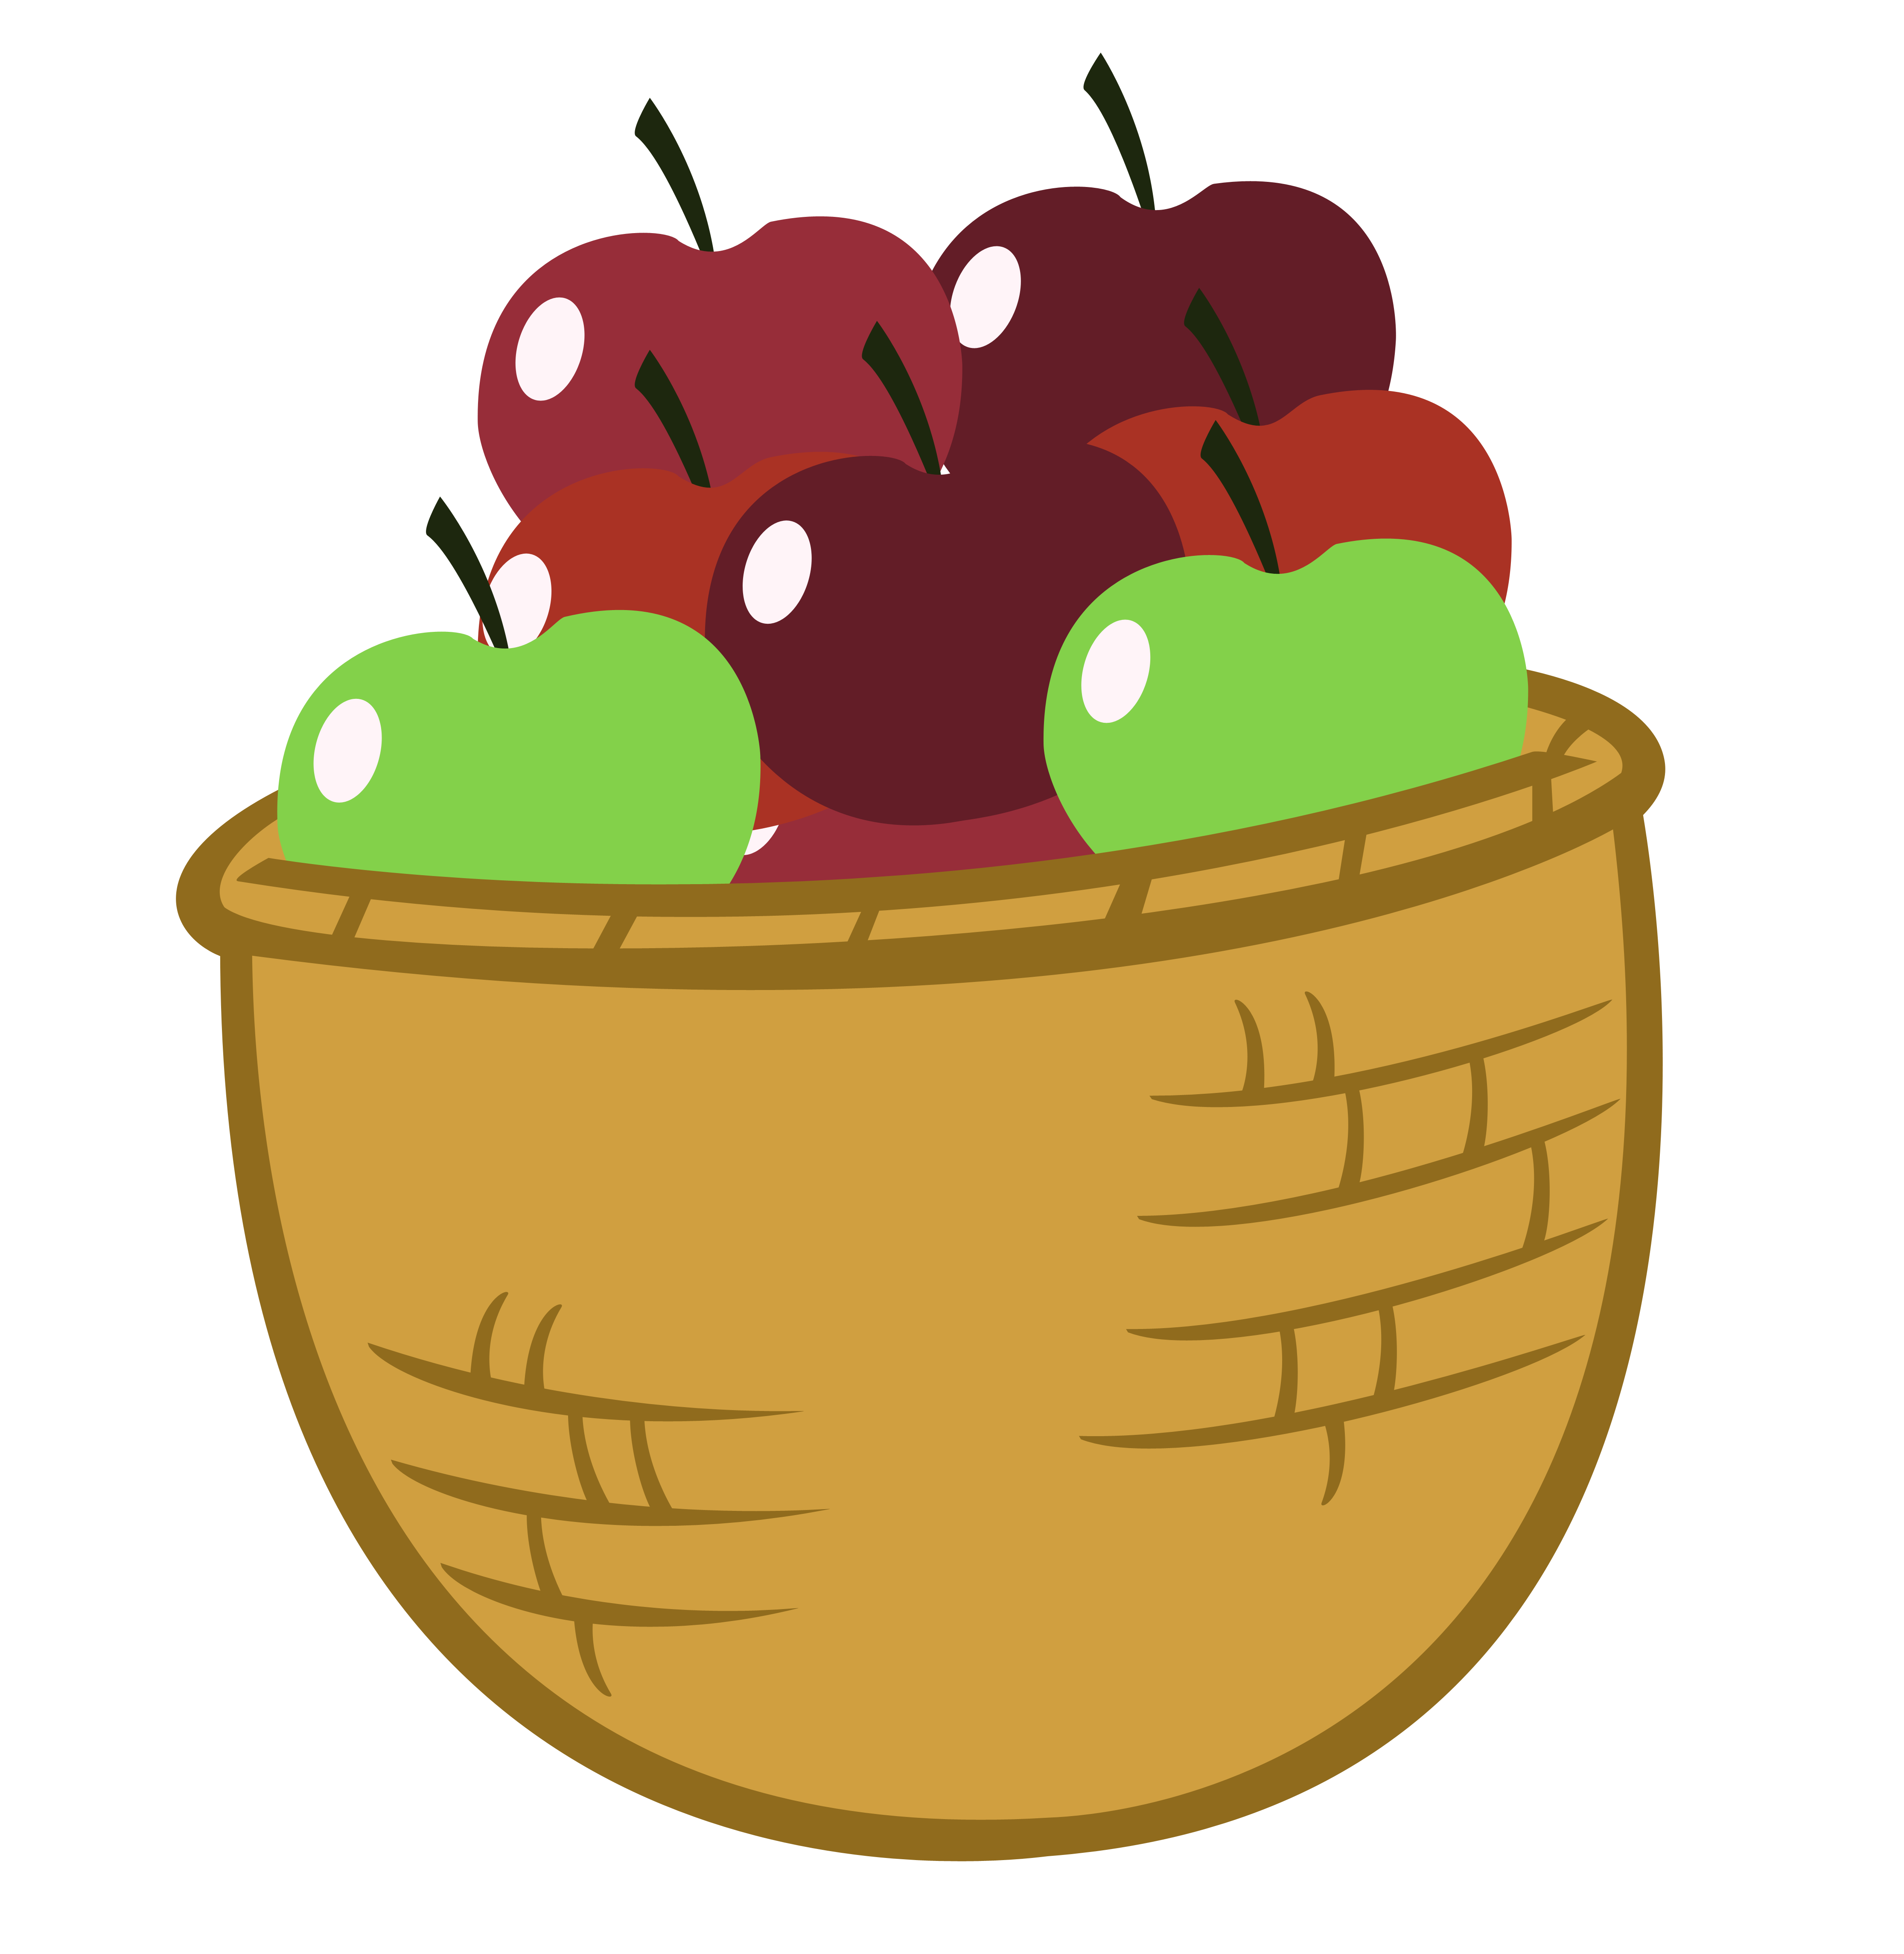 Basket of Apples Cartoon images